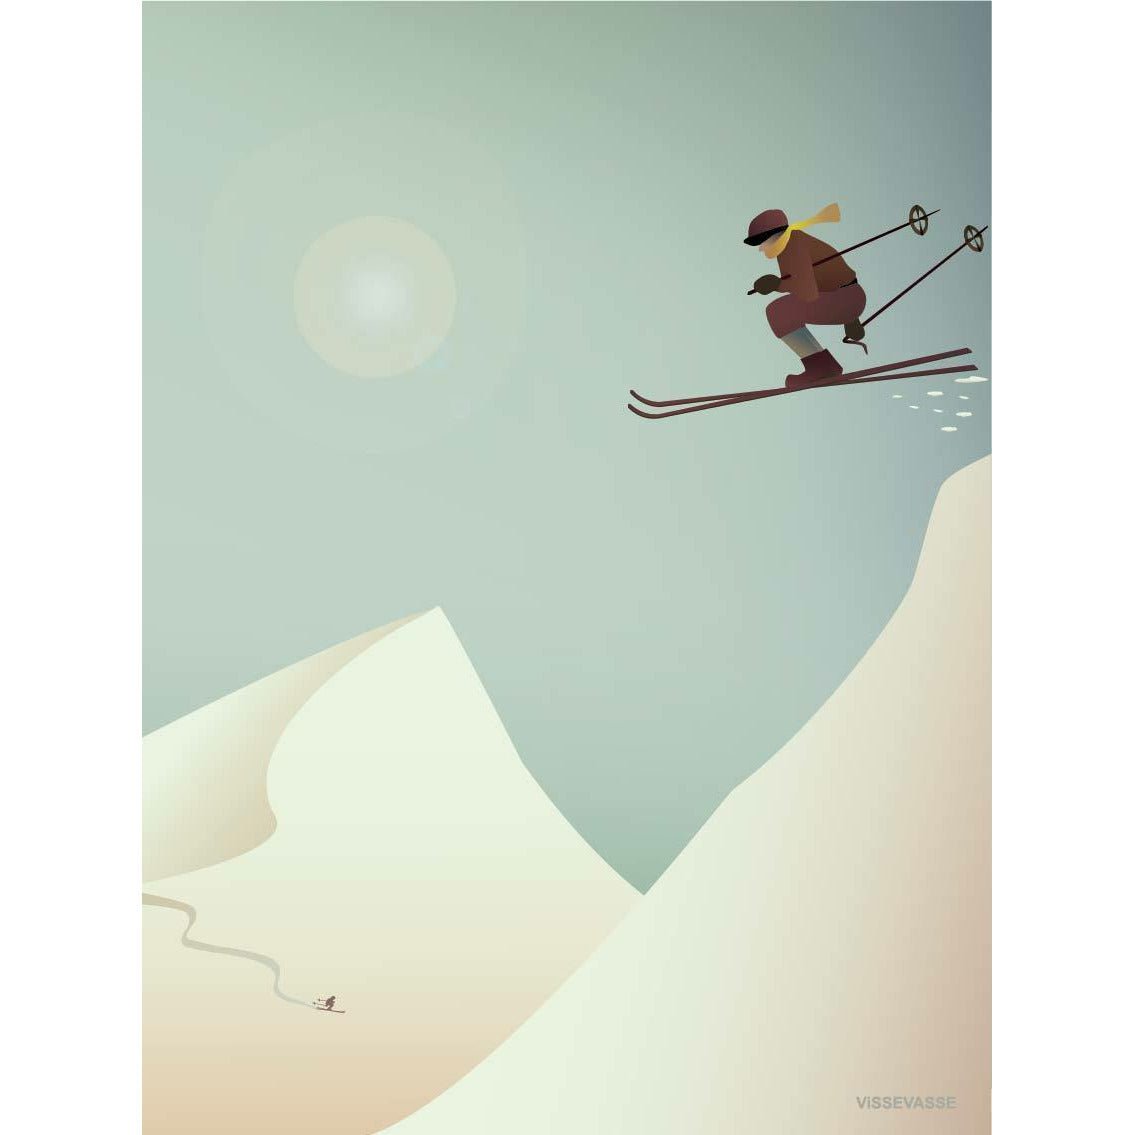 Vissevasse ski plakat, 70 x100 cm